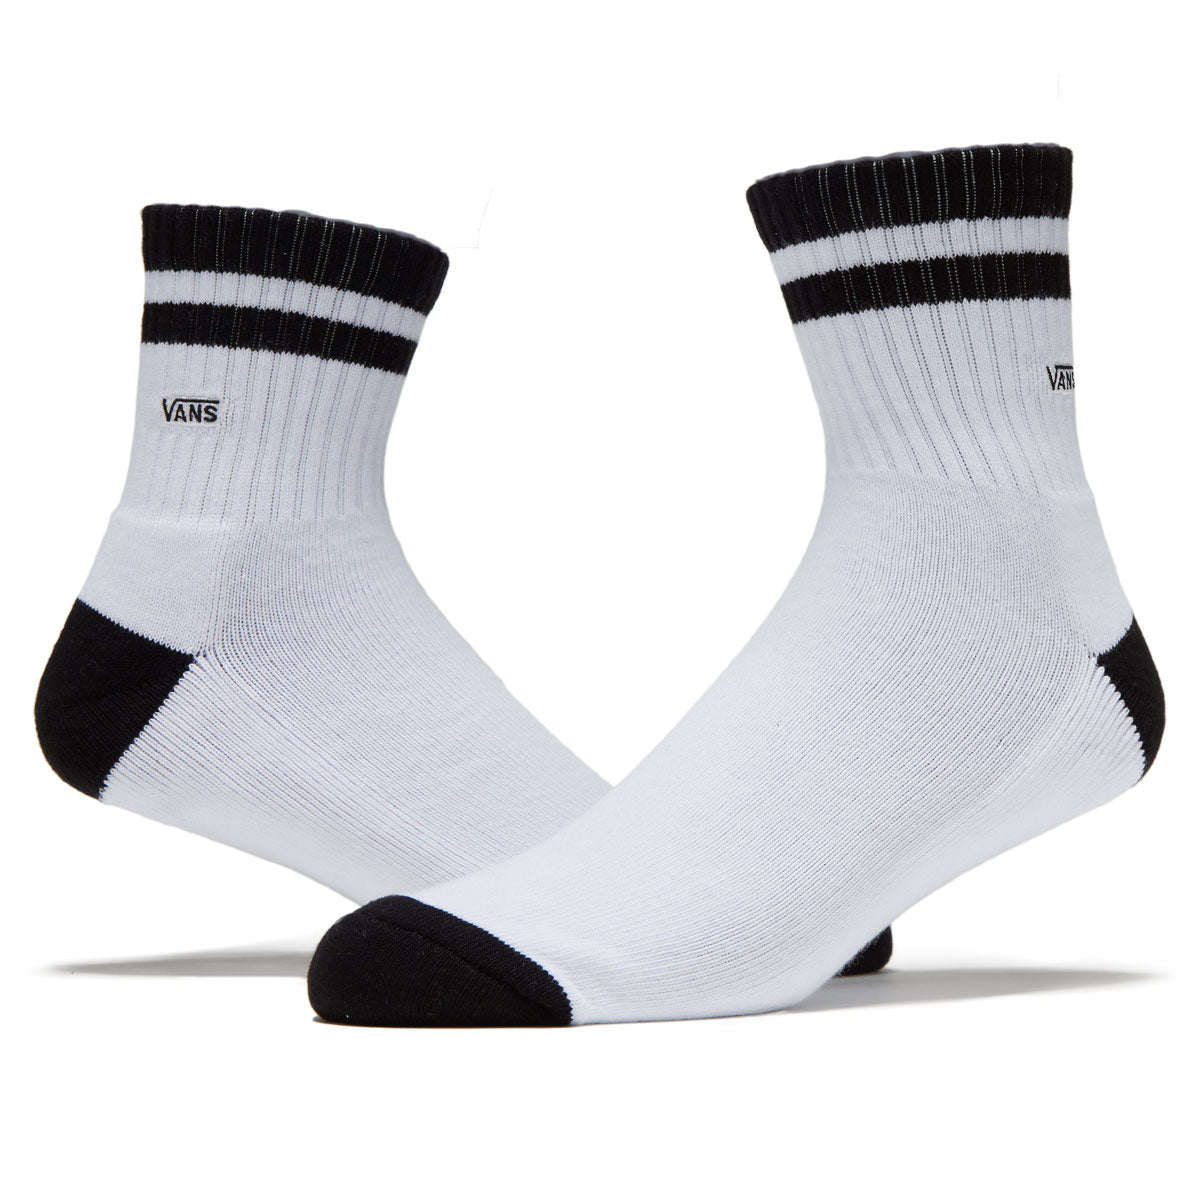 Vans Half Crew Socks - White/Black image 2